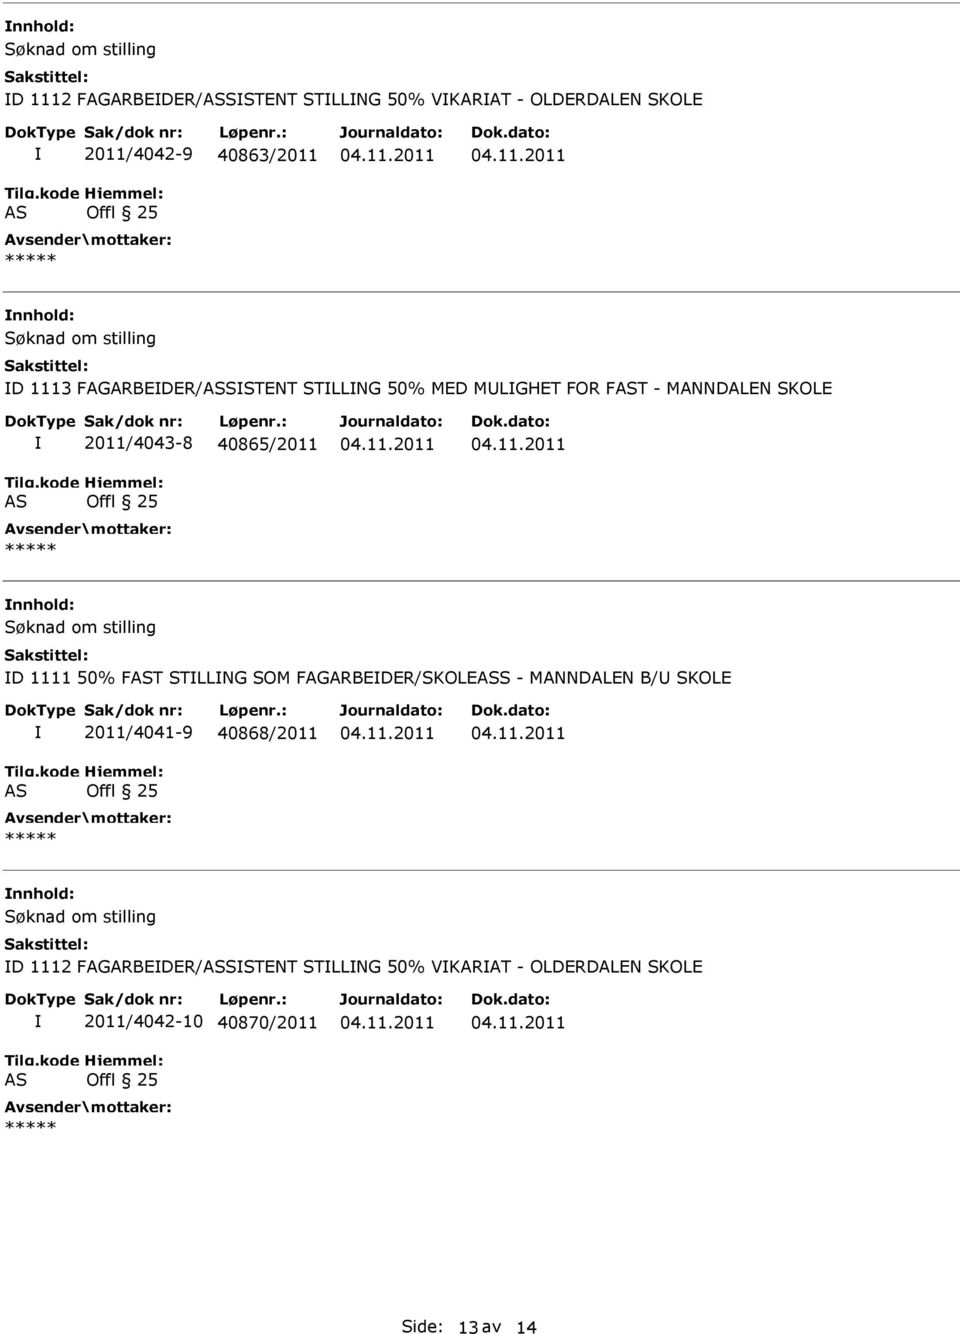 40865/2011 nnhold: D 1111 50% FT STLLNG SOM FAGARBEDER/SKOLES - MANNDALEN B/ SKOLE 2011/4041-9